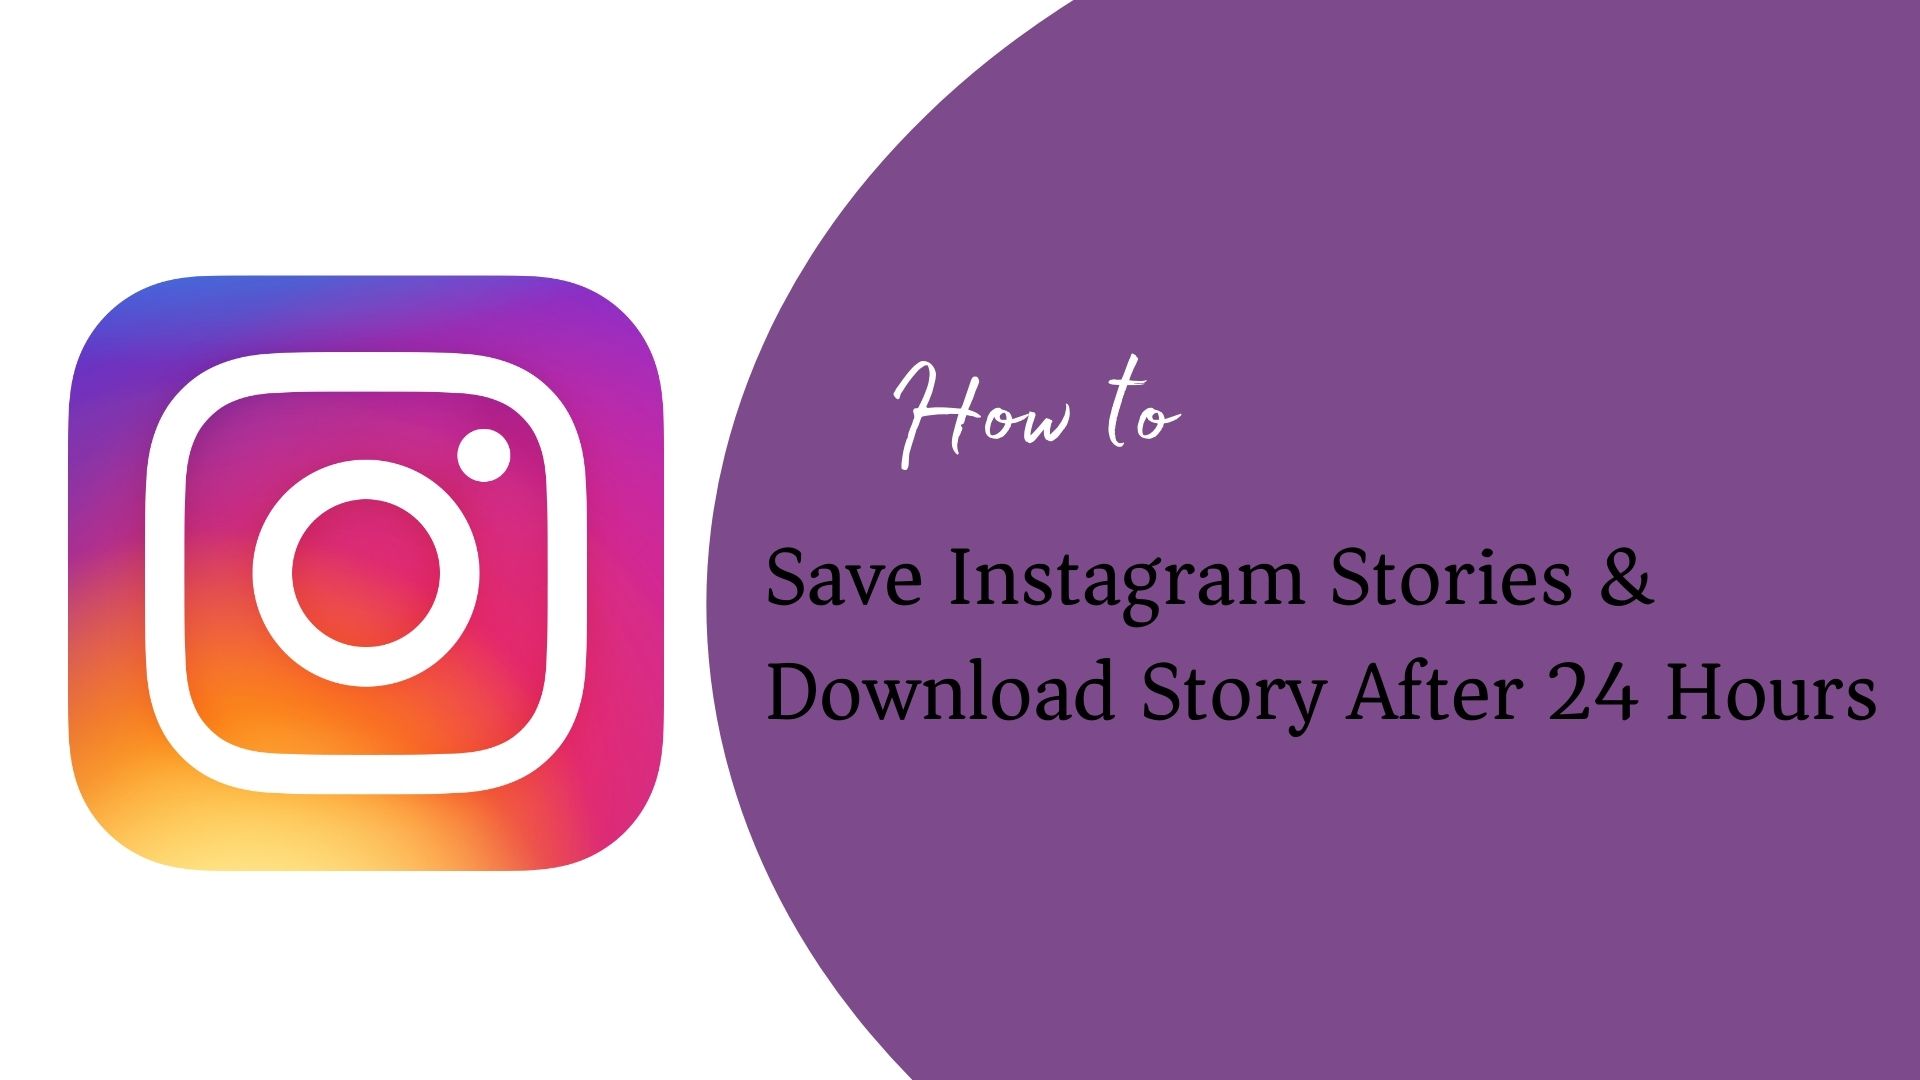 Save Instagram Stories